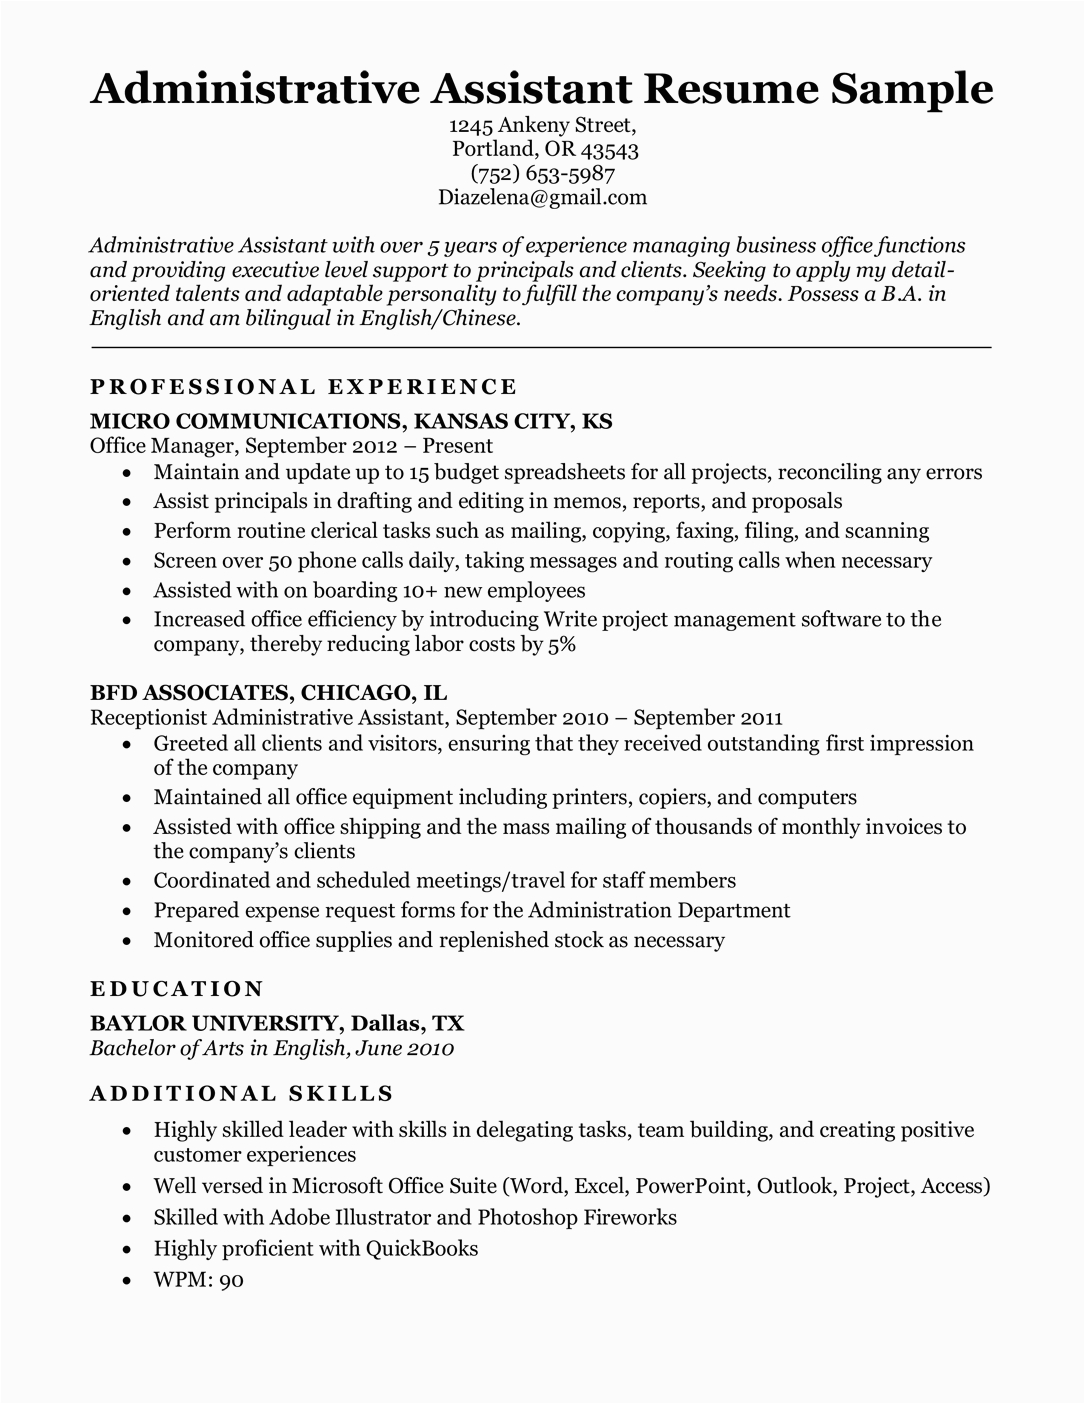 resume bio administrative assistant